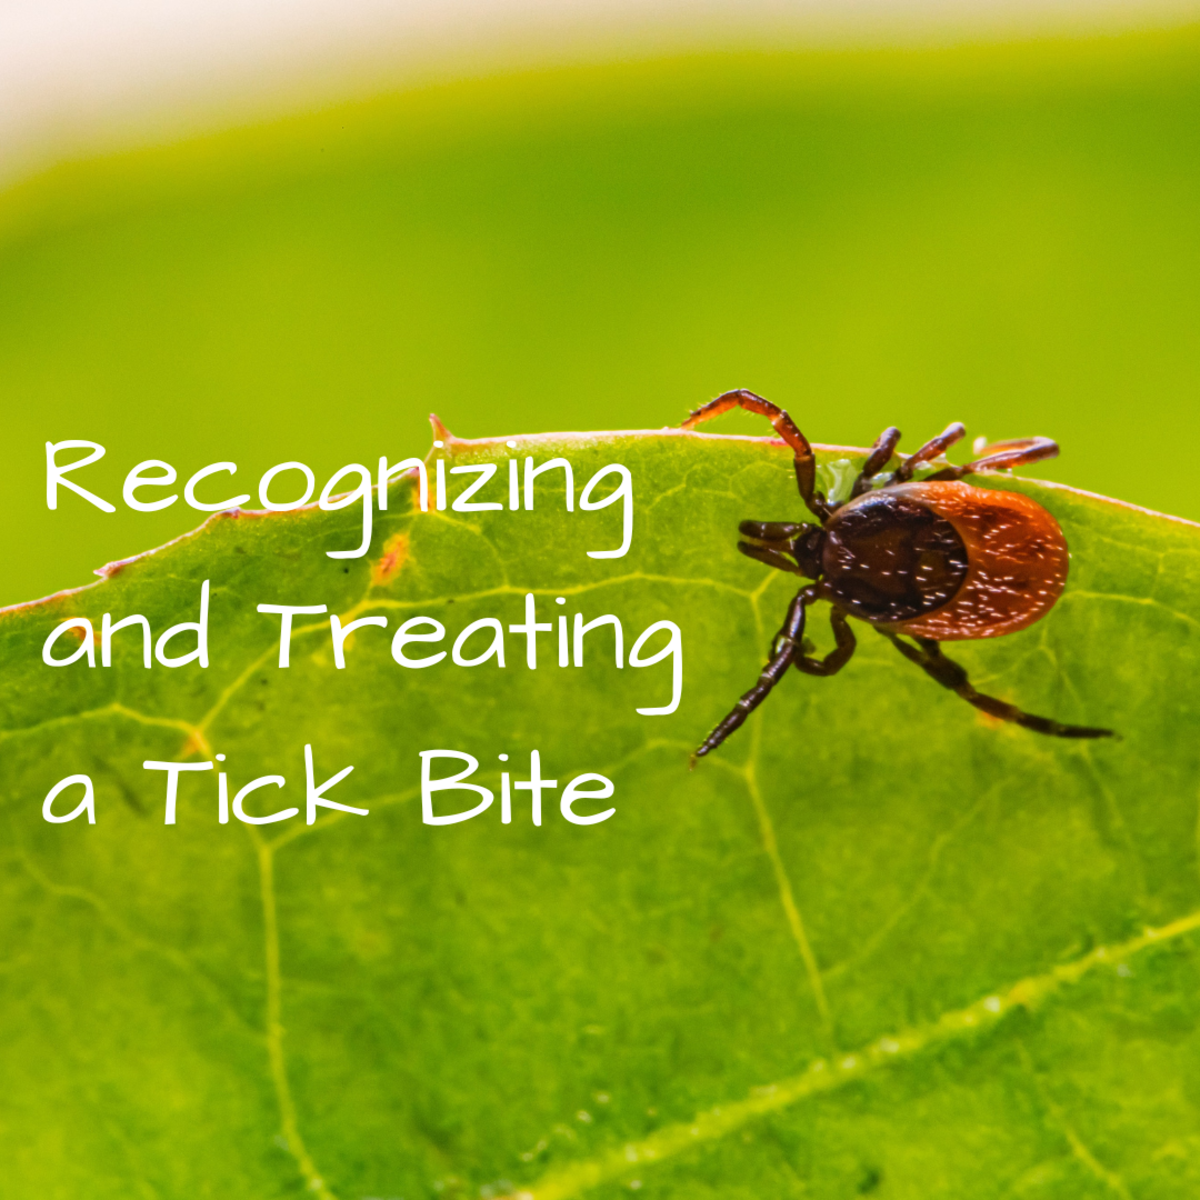 Tick Bite: Pictures, Symptoms, Causes, Treatment